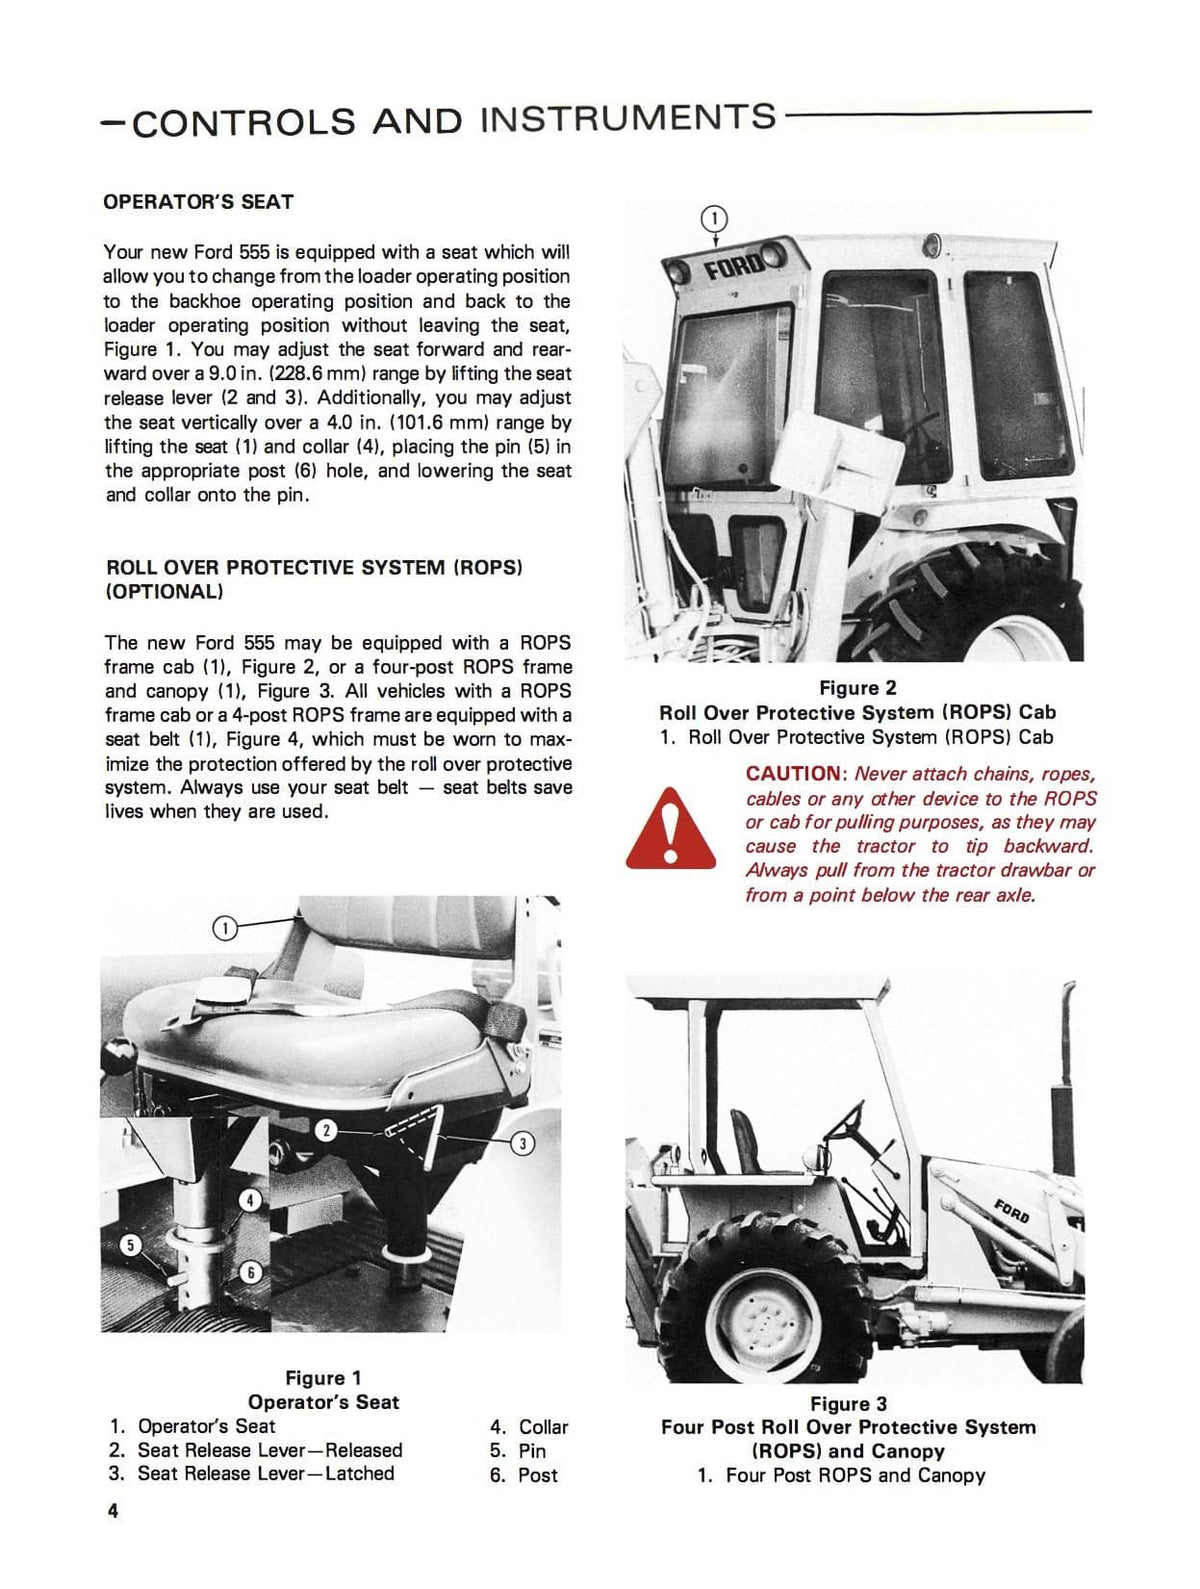 Ford 555 Tractor-Loader-Backhoe - Operator's Manual - Ag Manuals - A Provider of Digital Farm Manuals - 2